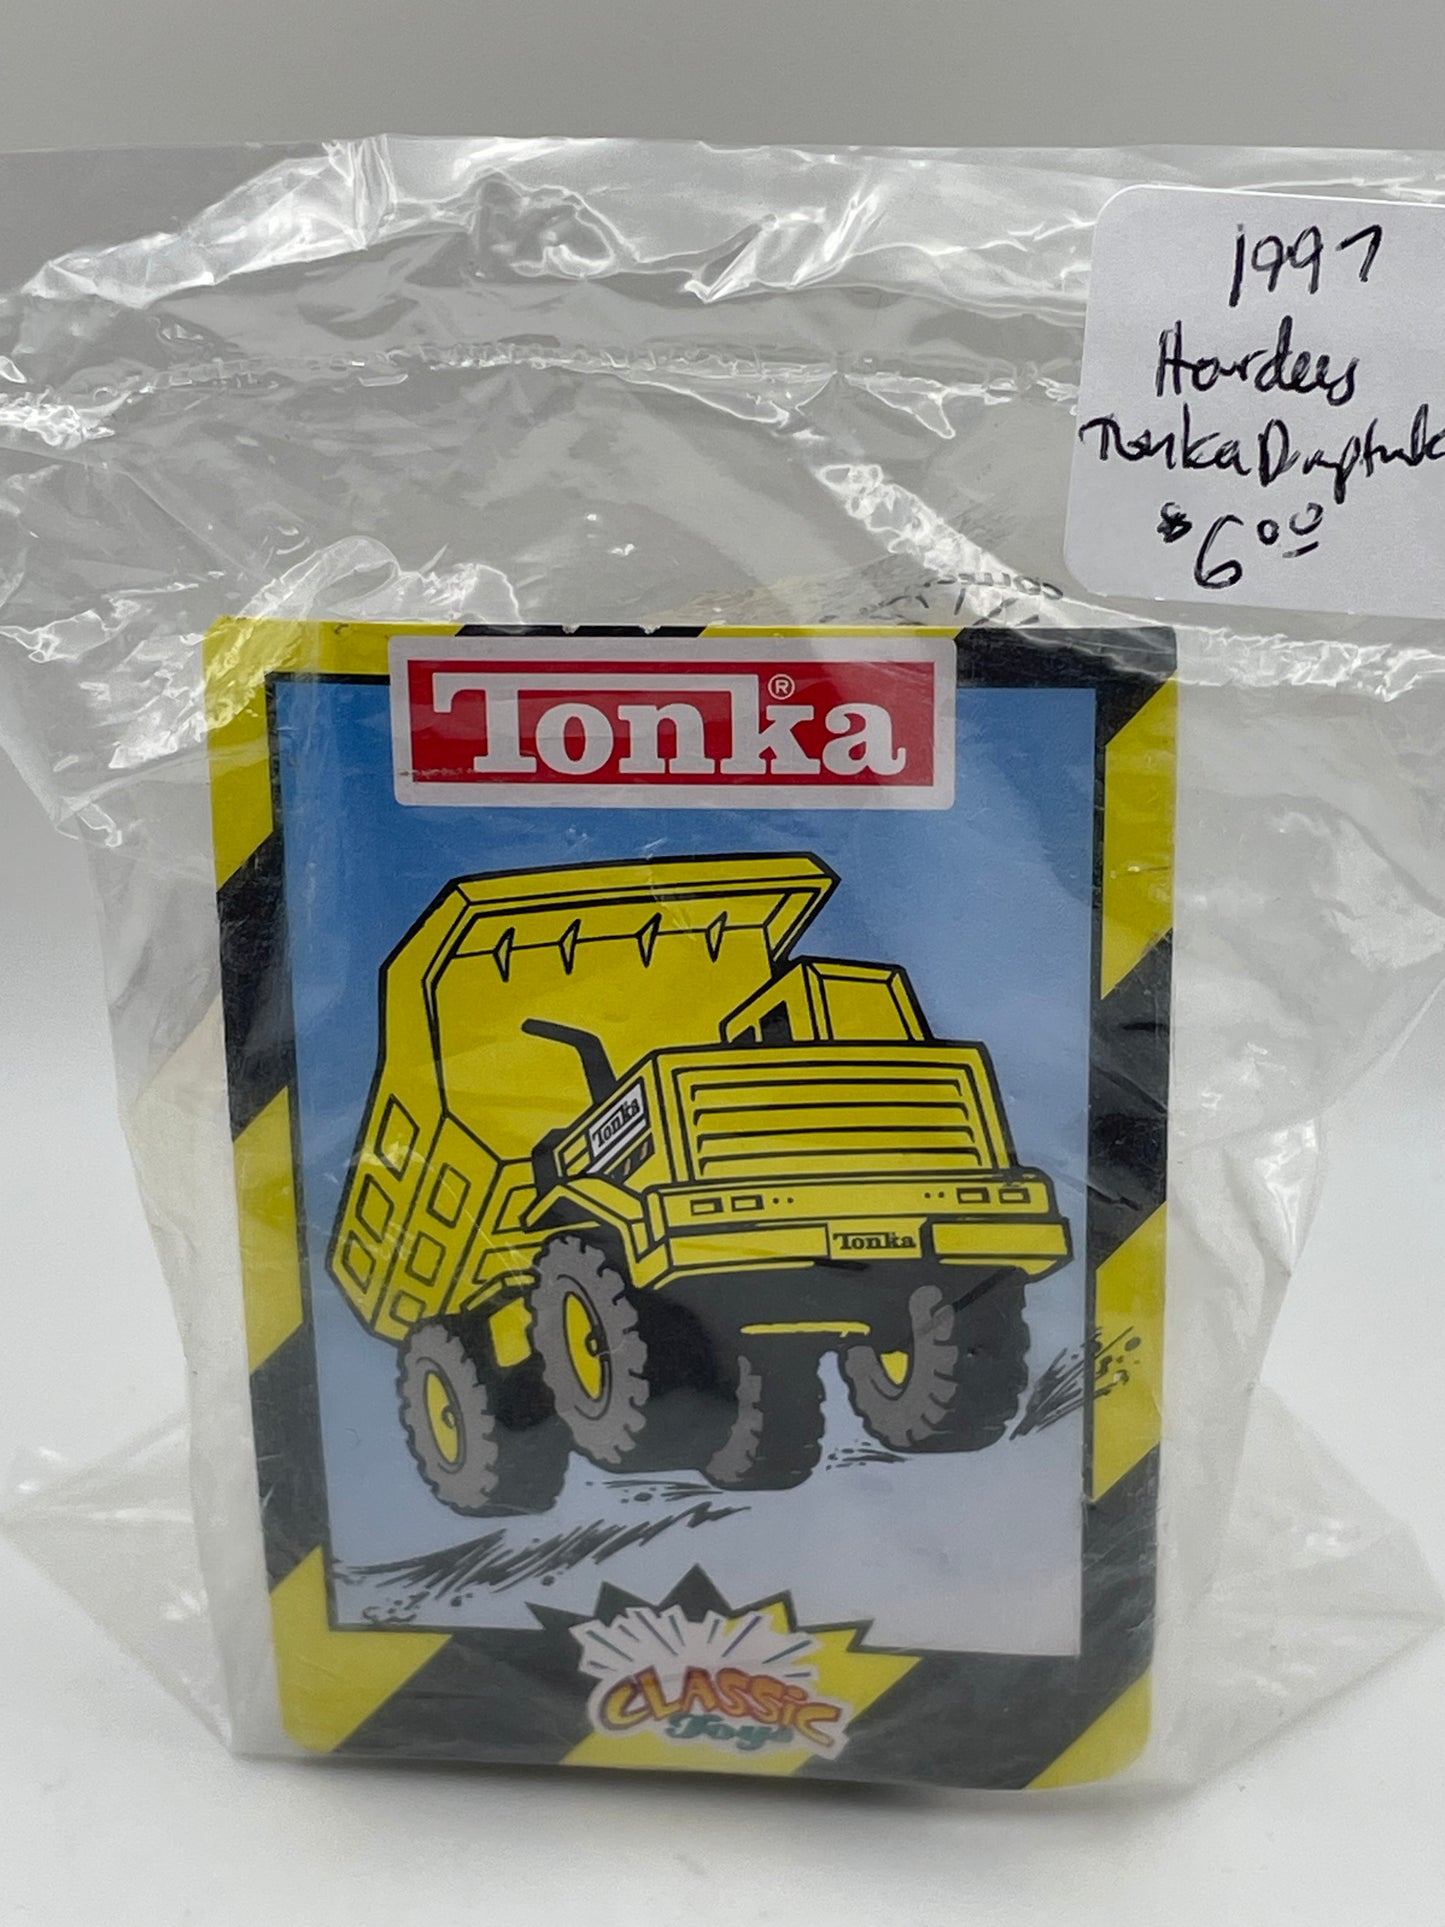 Hardee’s - Tonka Dump Truck 1997 #103069